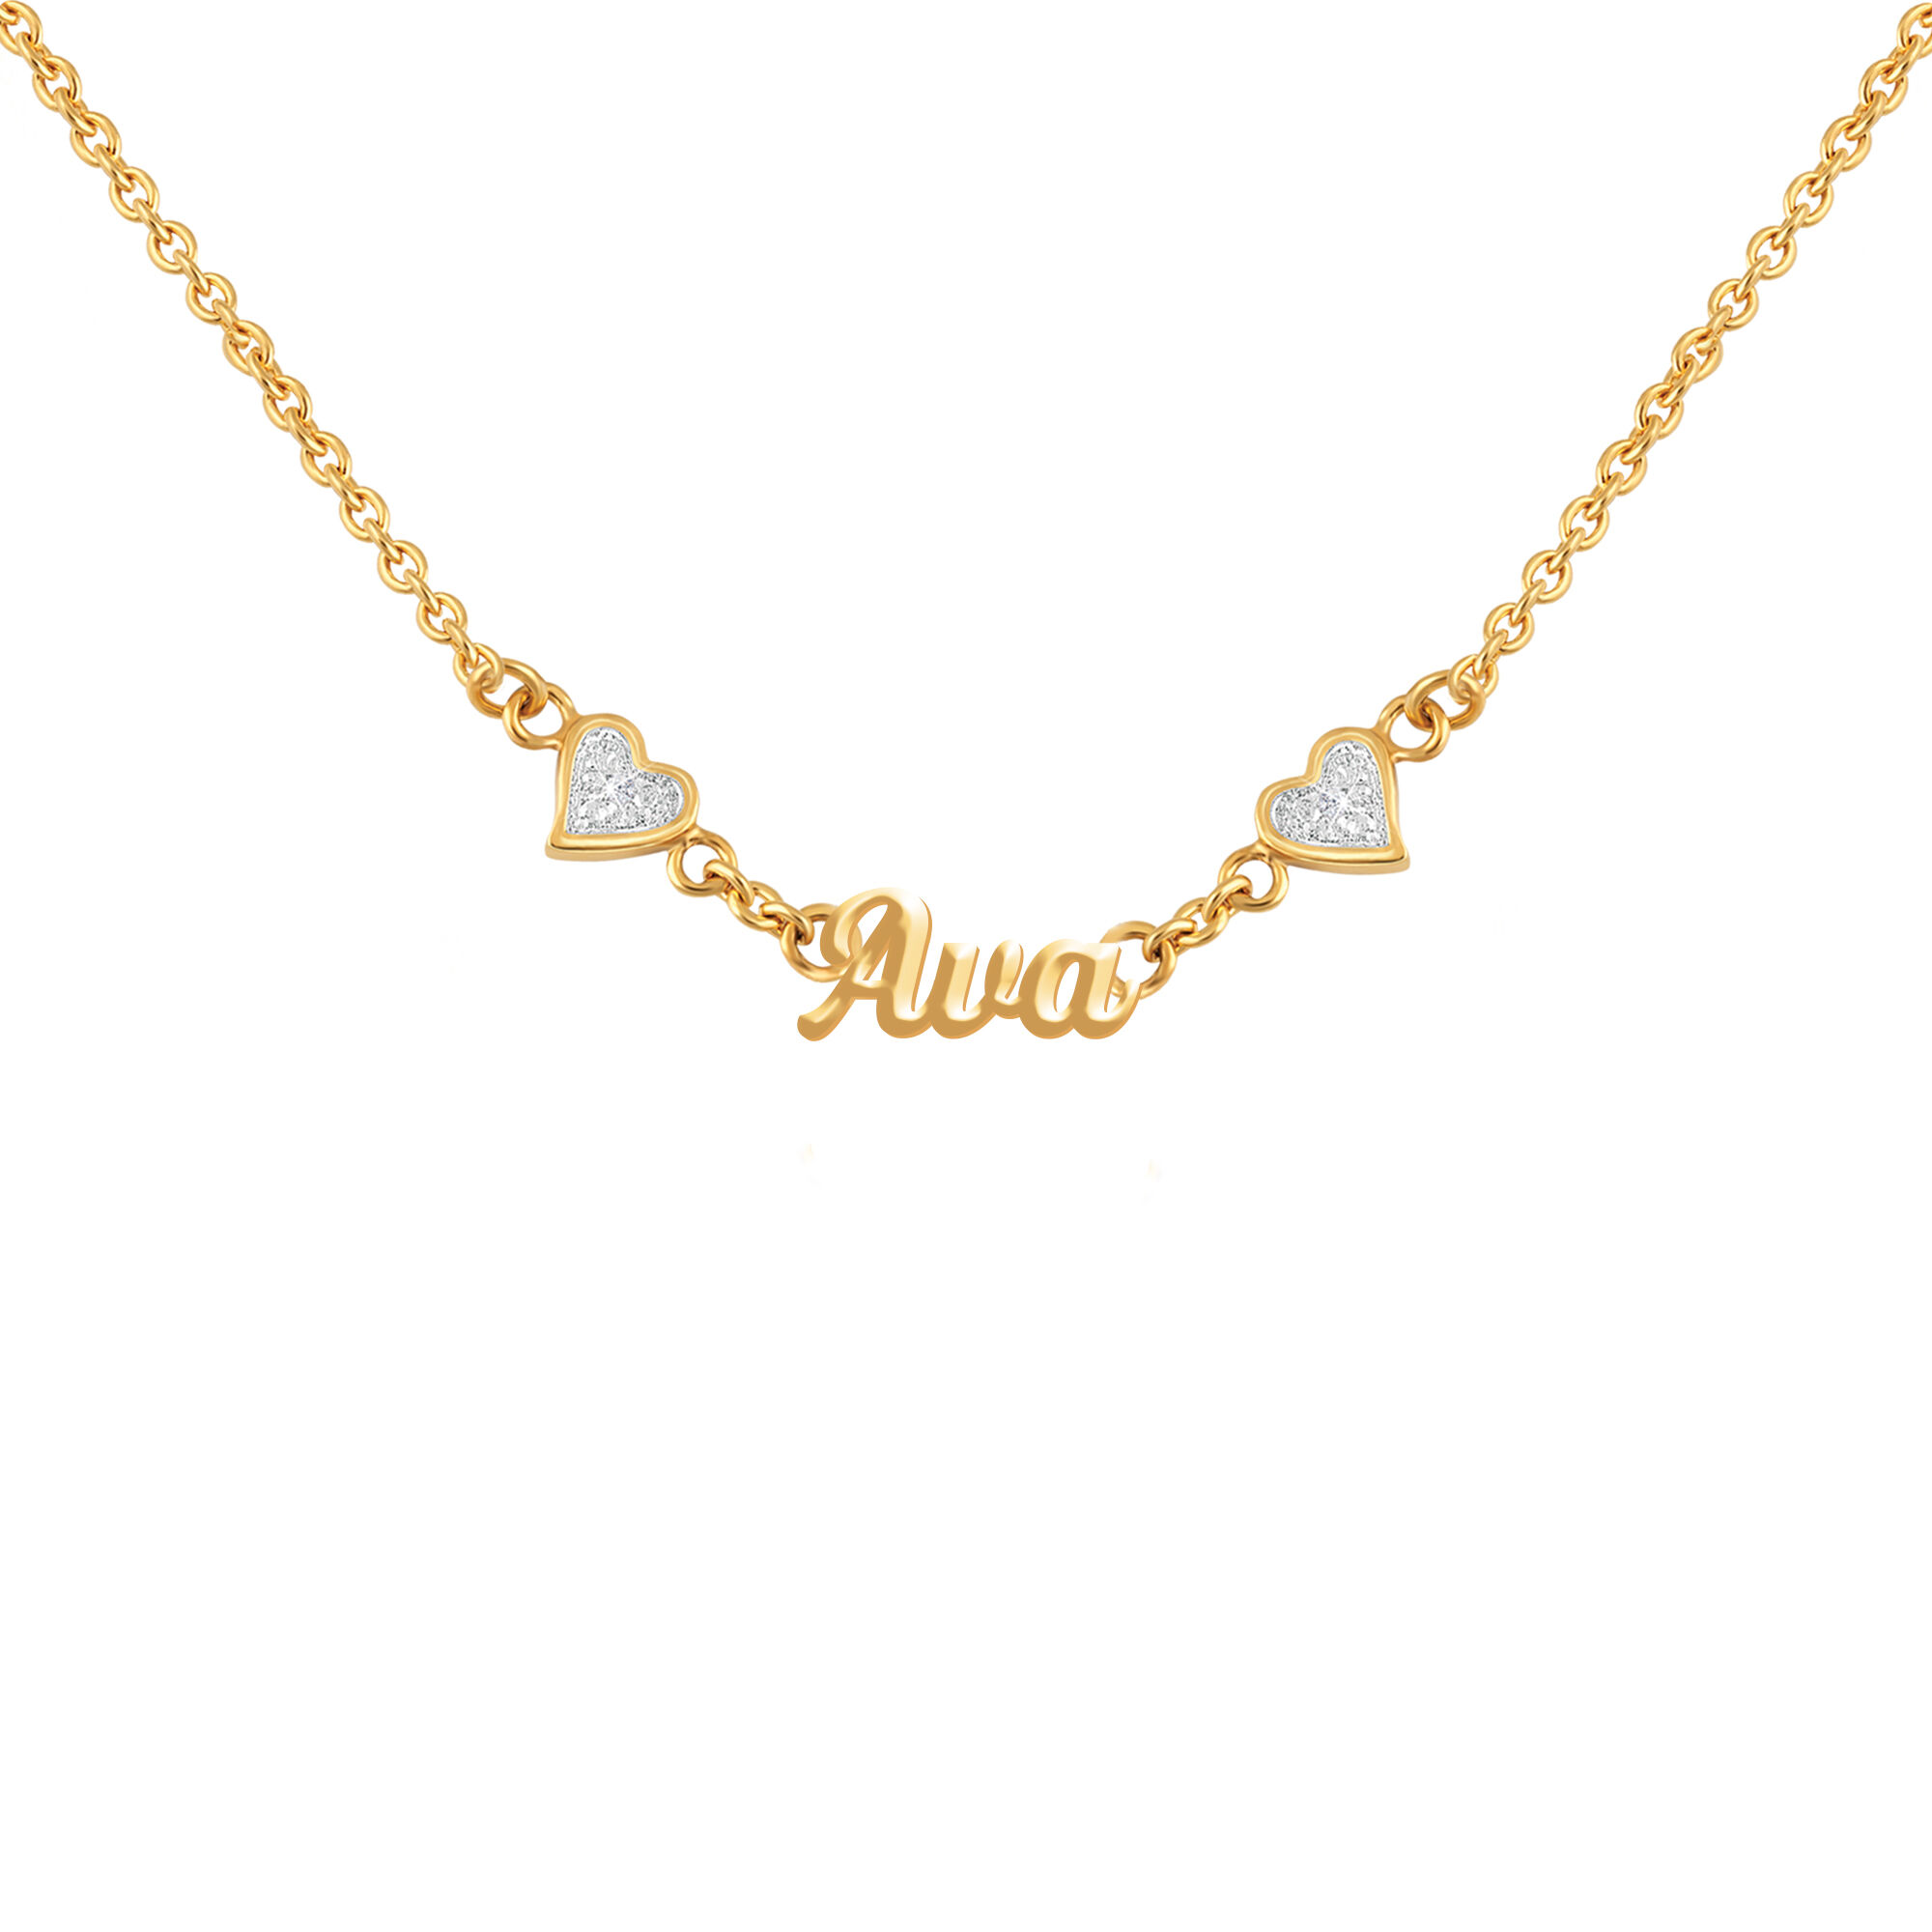 Personalized Child Diamond Name Necklace 4994 4234 c ava